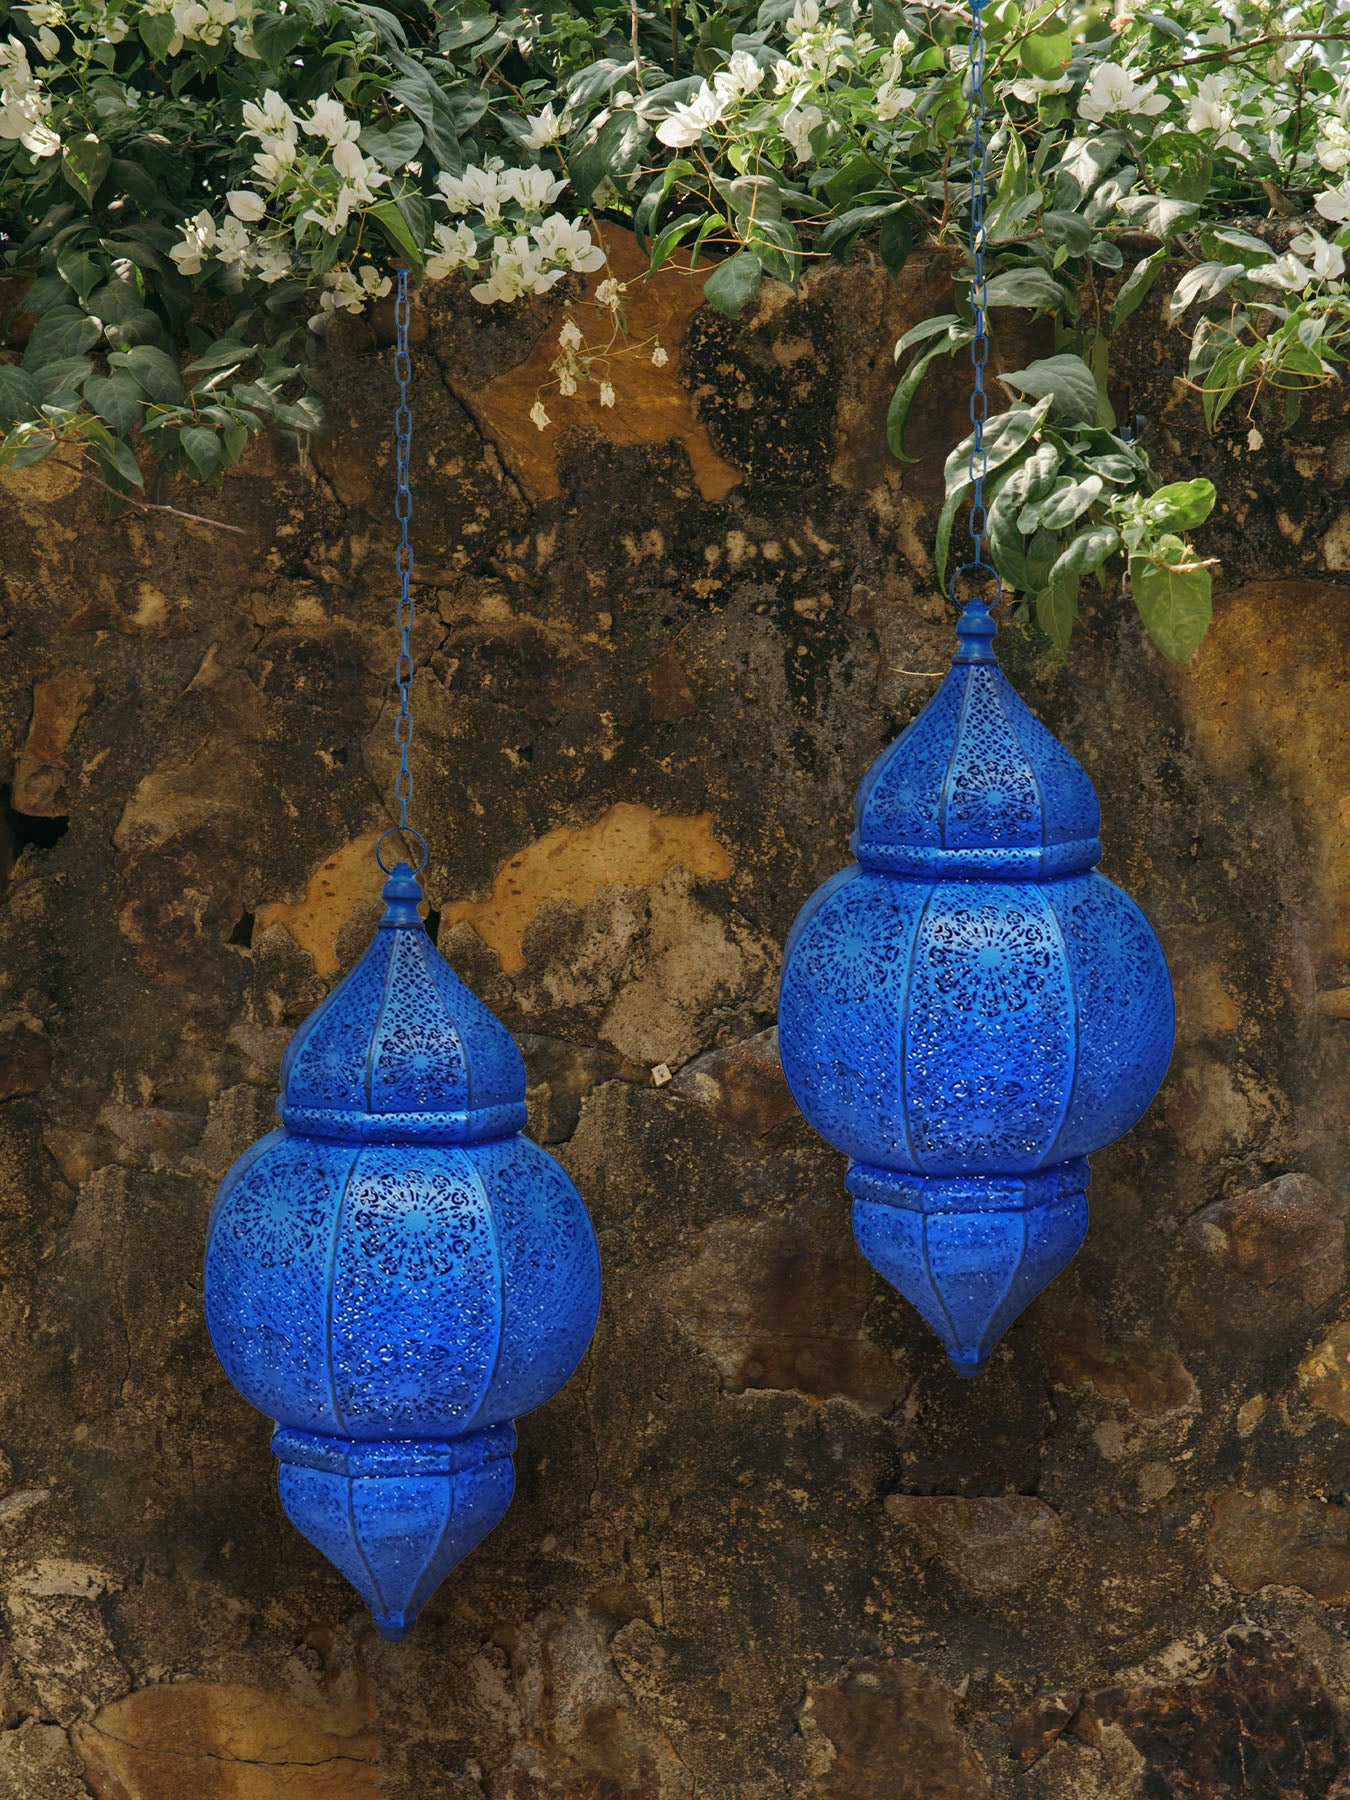 Moroccan Jali Lantern